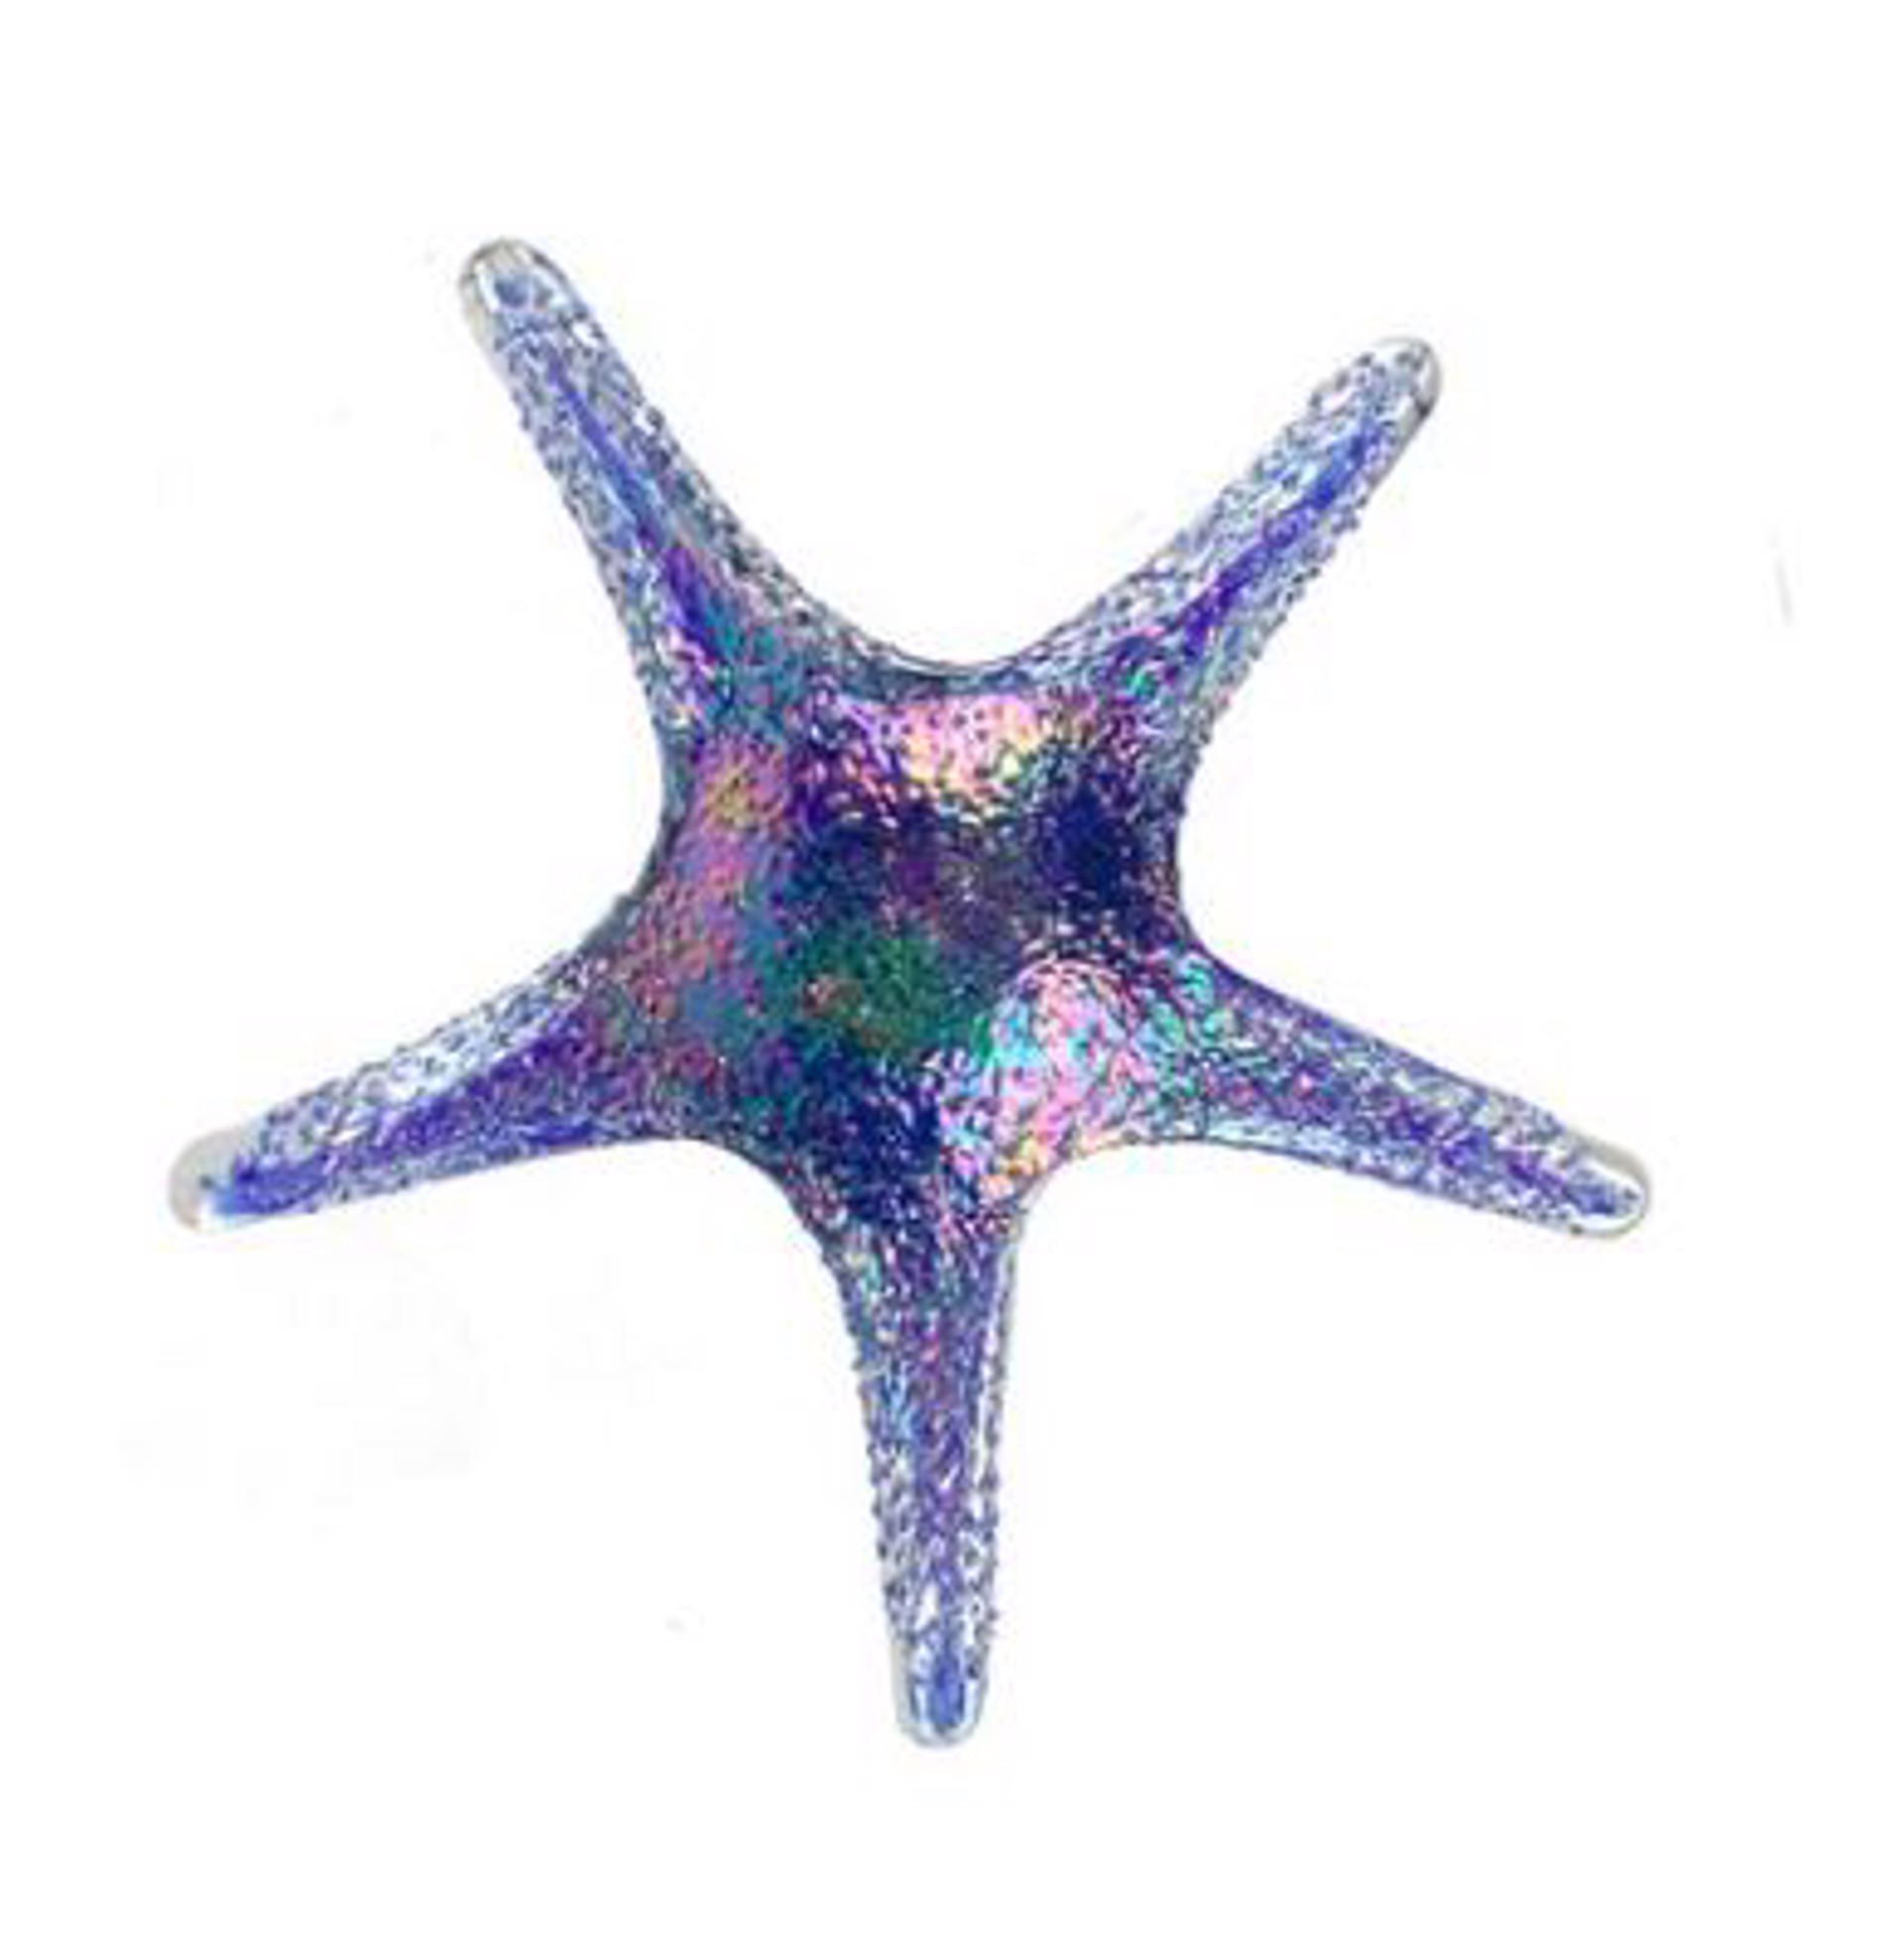 Small Cobalt Starfish - 7841SIR by V Handblown Glass